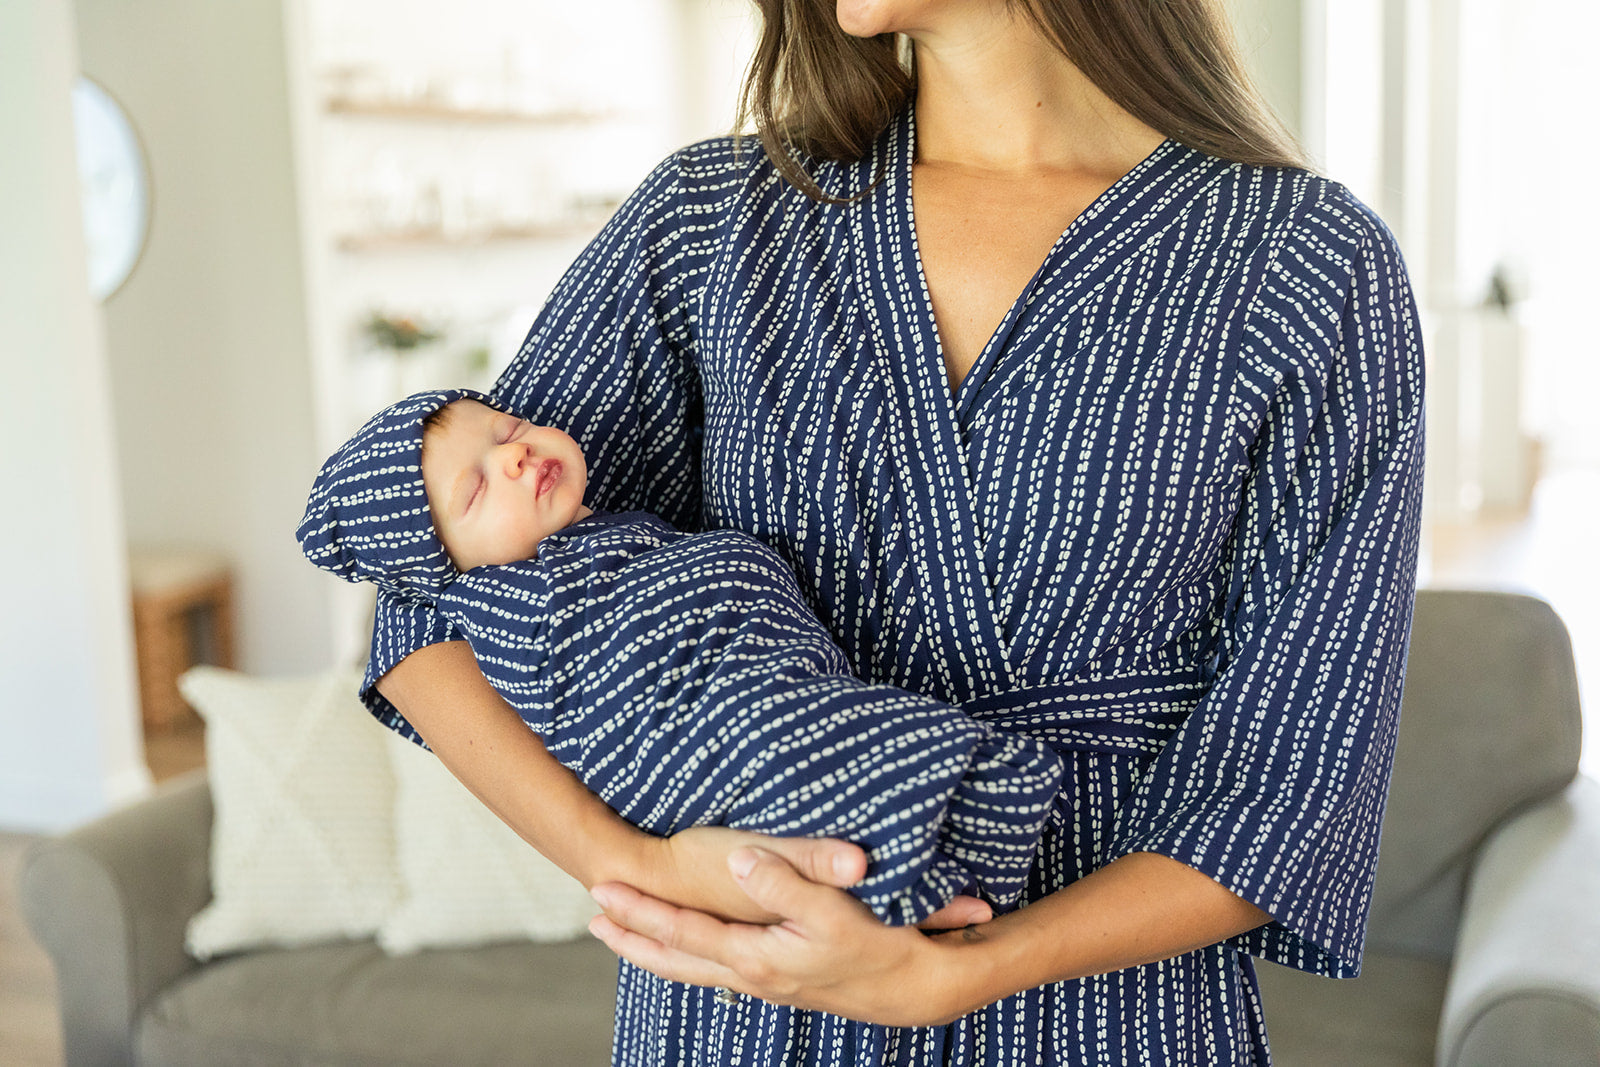  Maternity Robe Matching BaFby Receiving Swaddle Blanket Set  Newborn Hospital Labor Delivery Nursing Pregnancy Robe (Purple - 3Pcs,  L-XL) : Baby